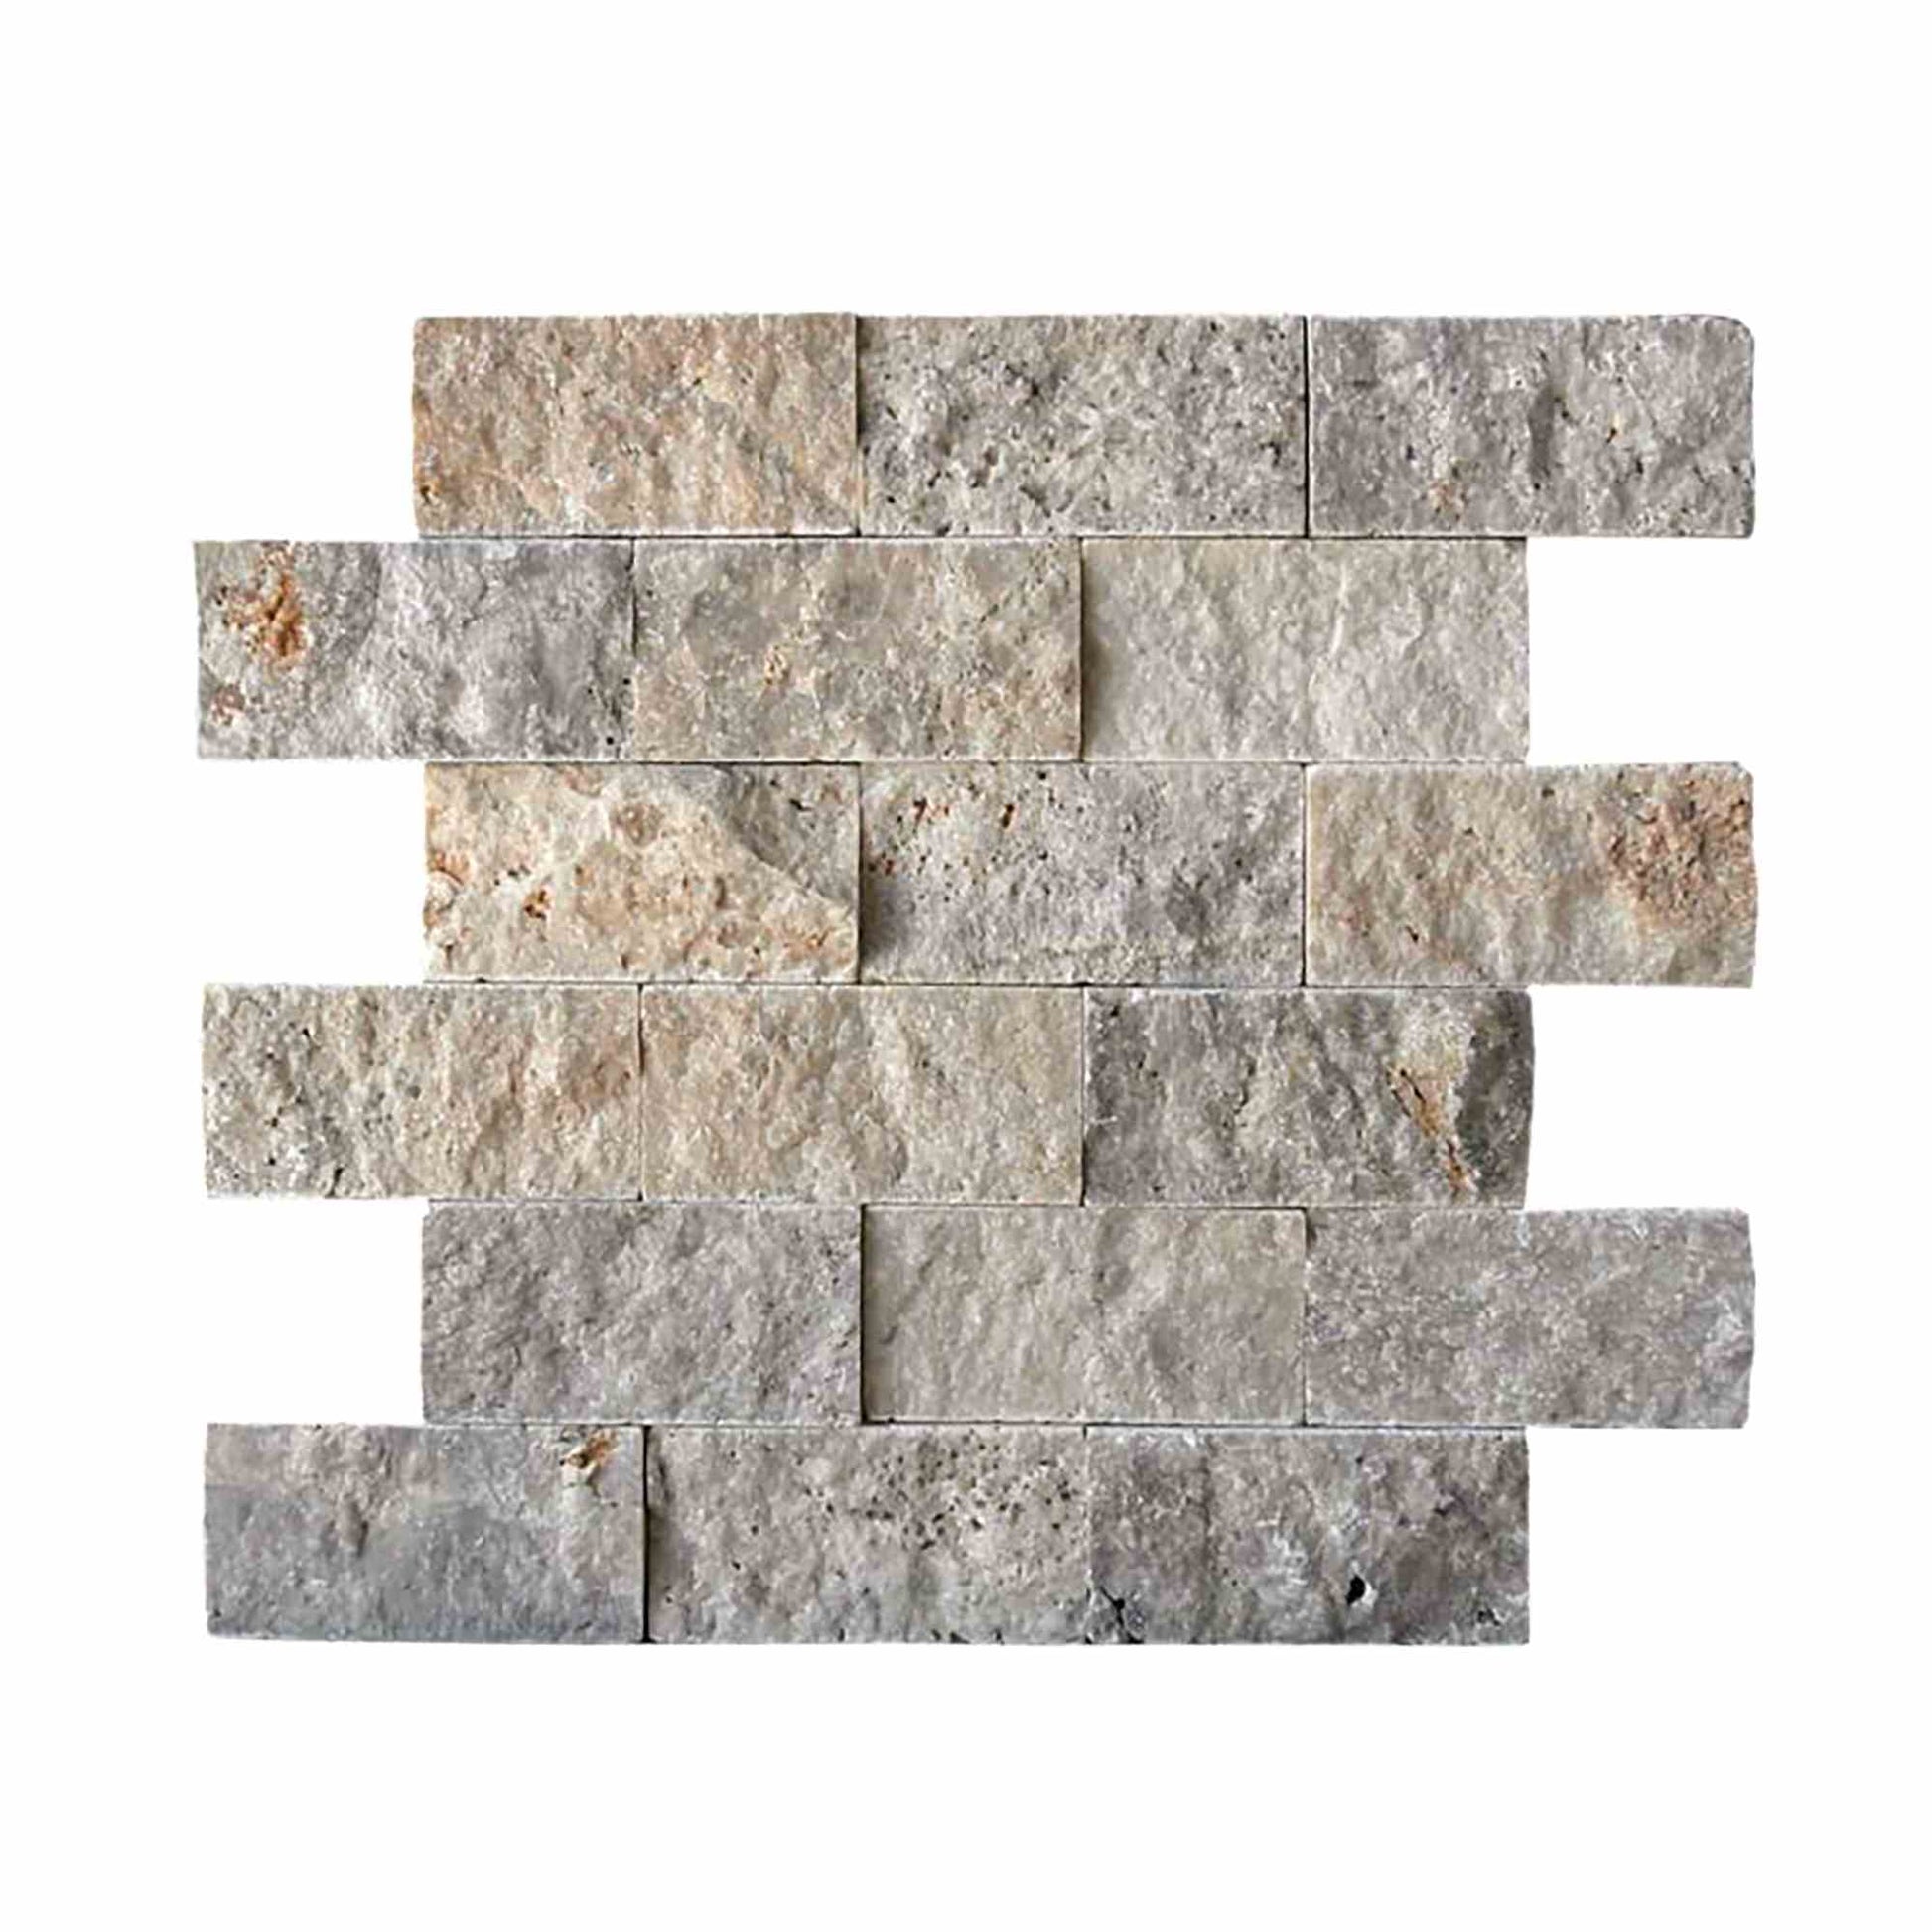 Silver Travertine Split Faced Brick Mosaic Tile 2x4"